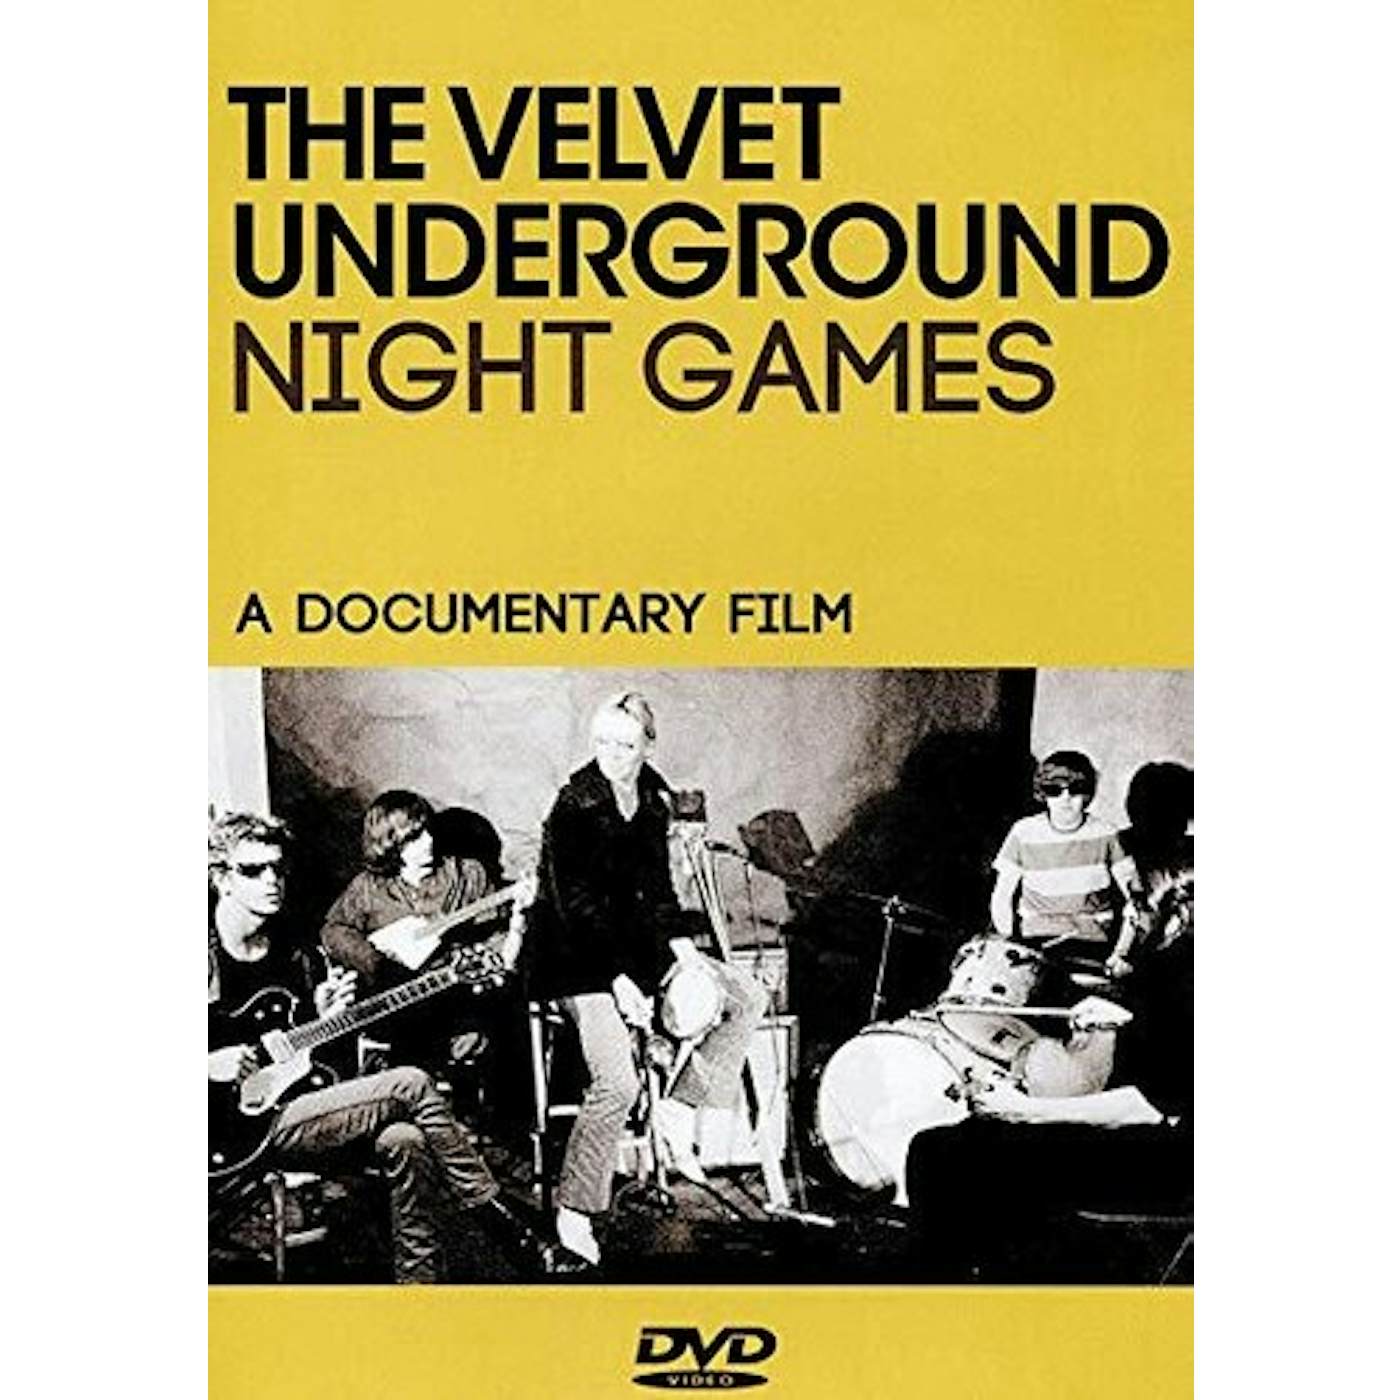 The Velvet Underground NIGHT GAMES DVD